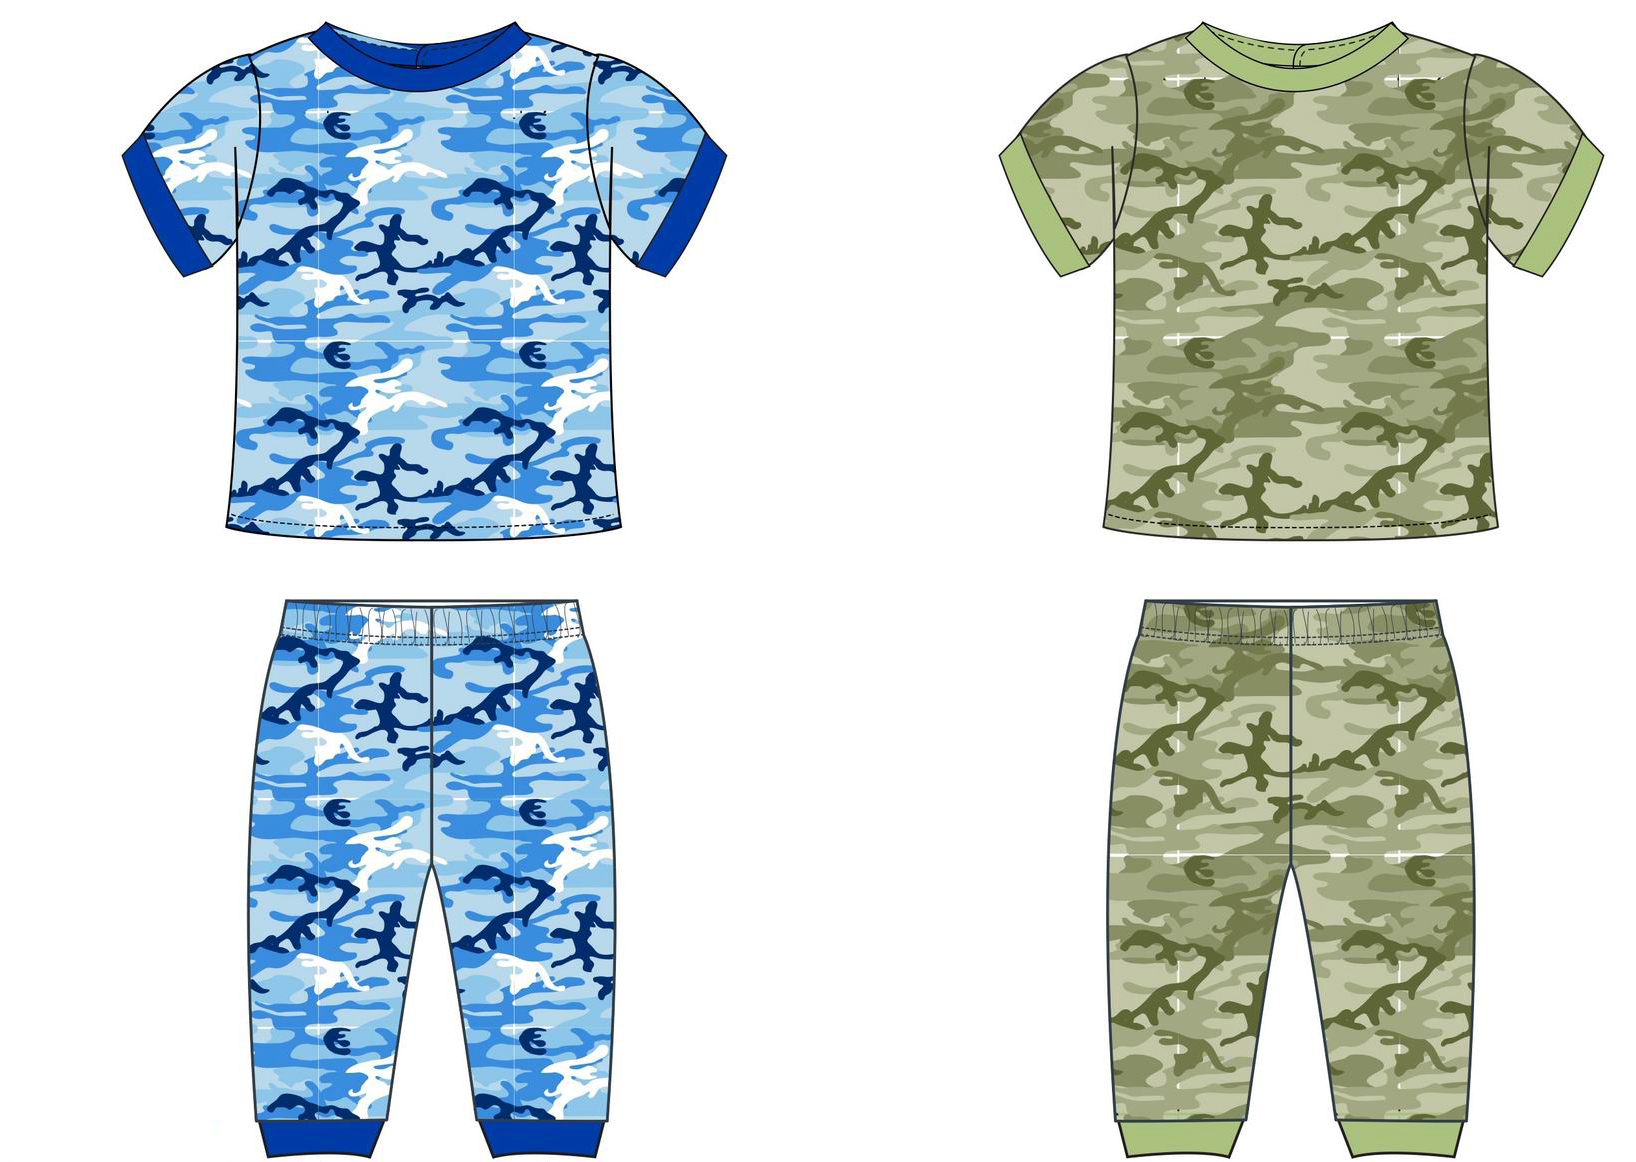 Boy's 2 PC. Rib Pajama Sets w/ Short-Sleeve SHIRT & Pull-On Pants - Camo Print - Sizes 2T-4T